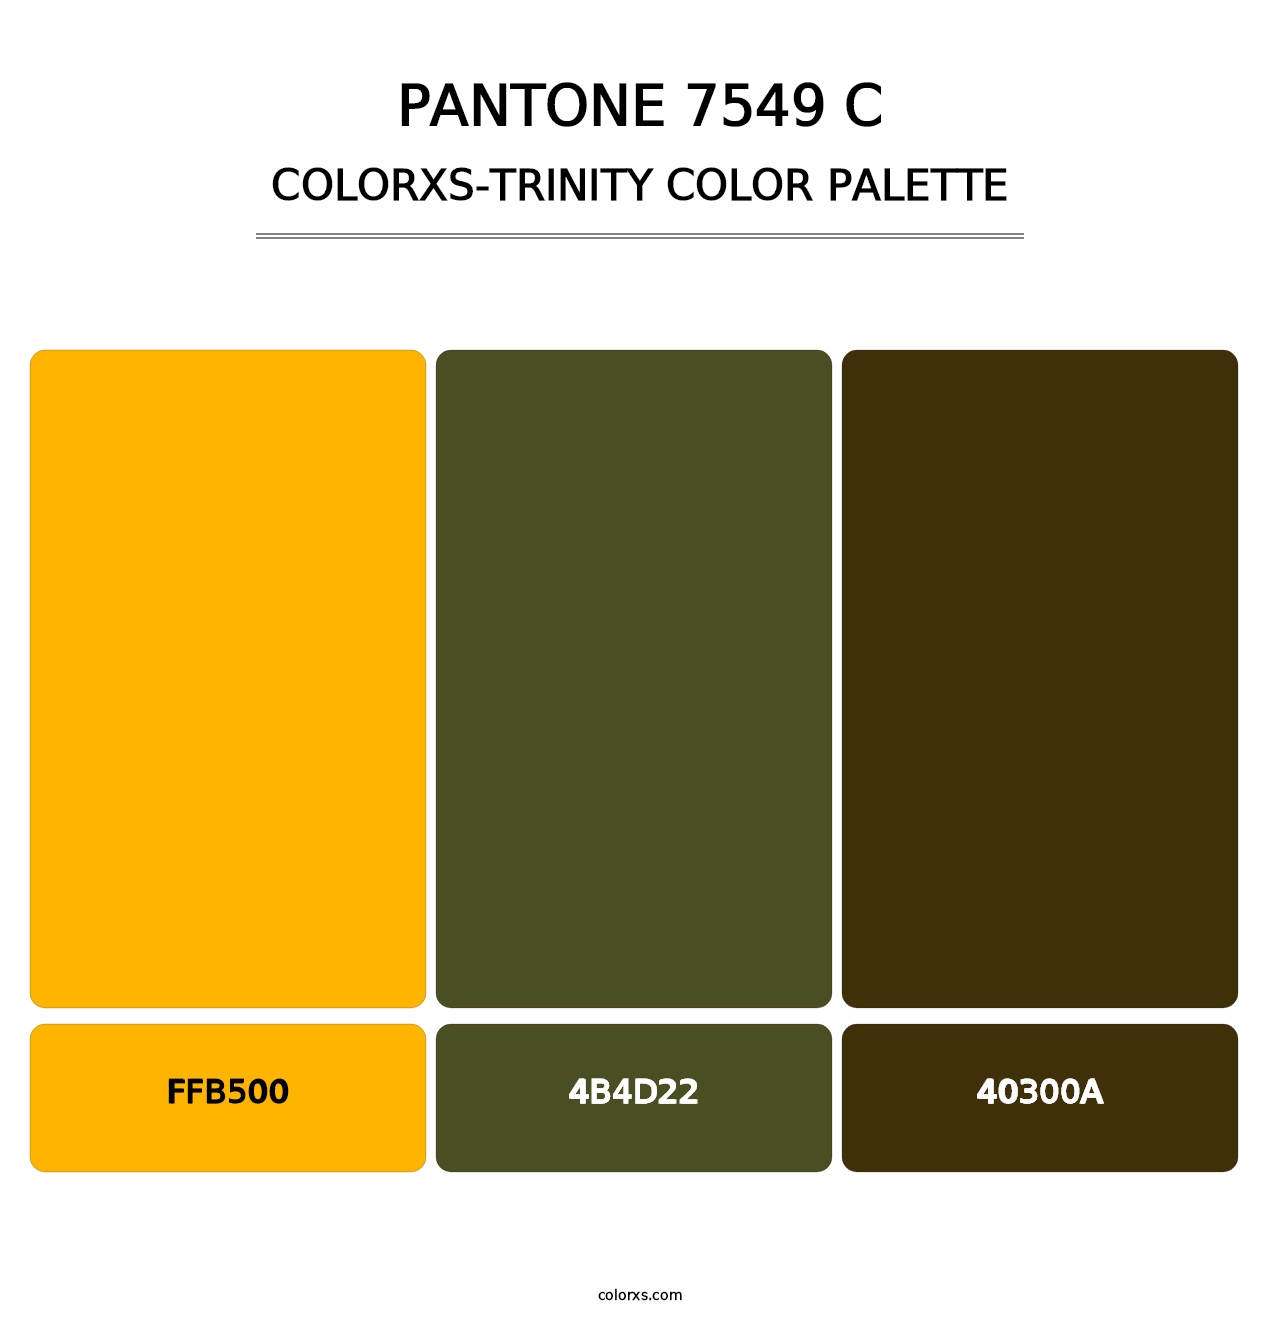 PANTONE 7549 C - Colorxs Trinity Palette